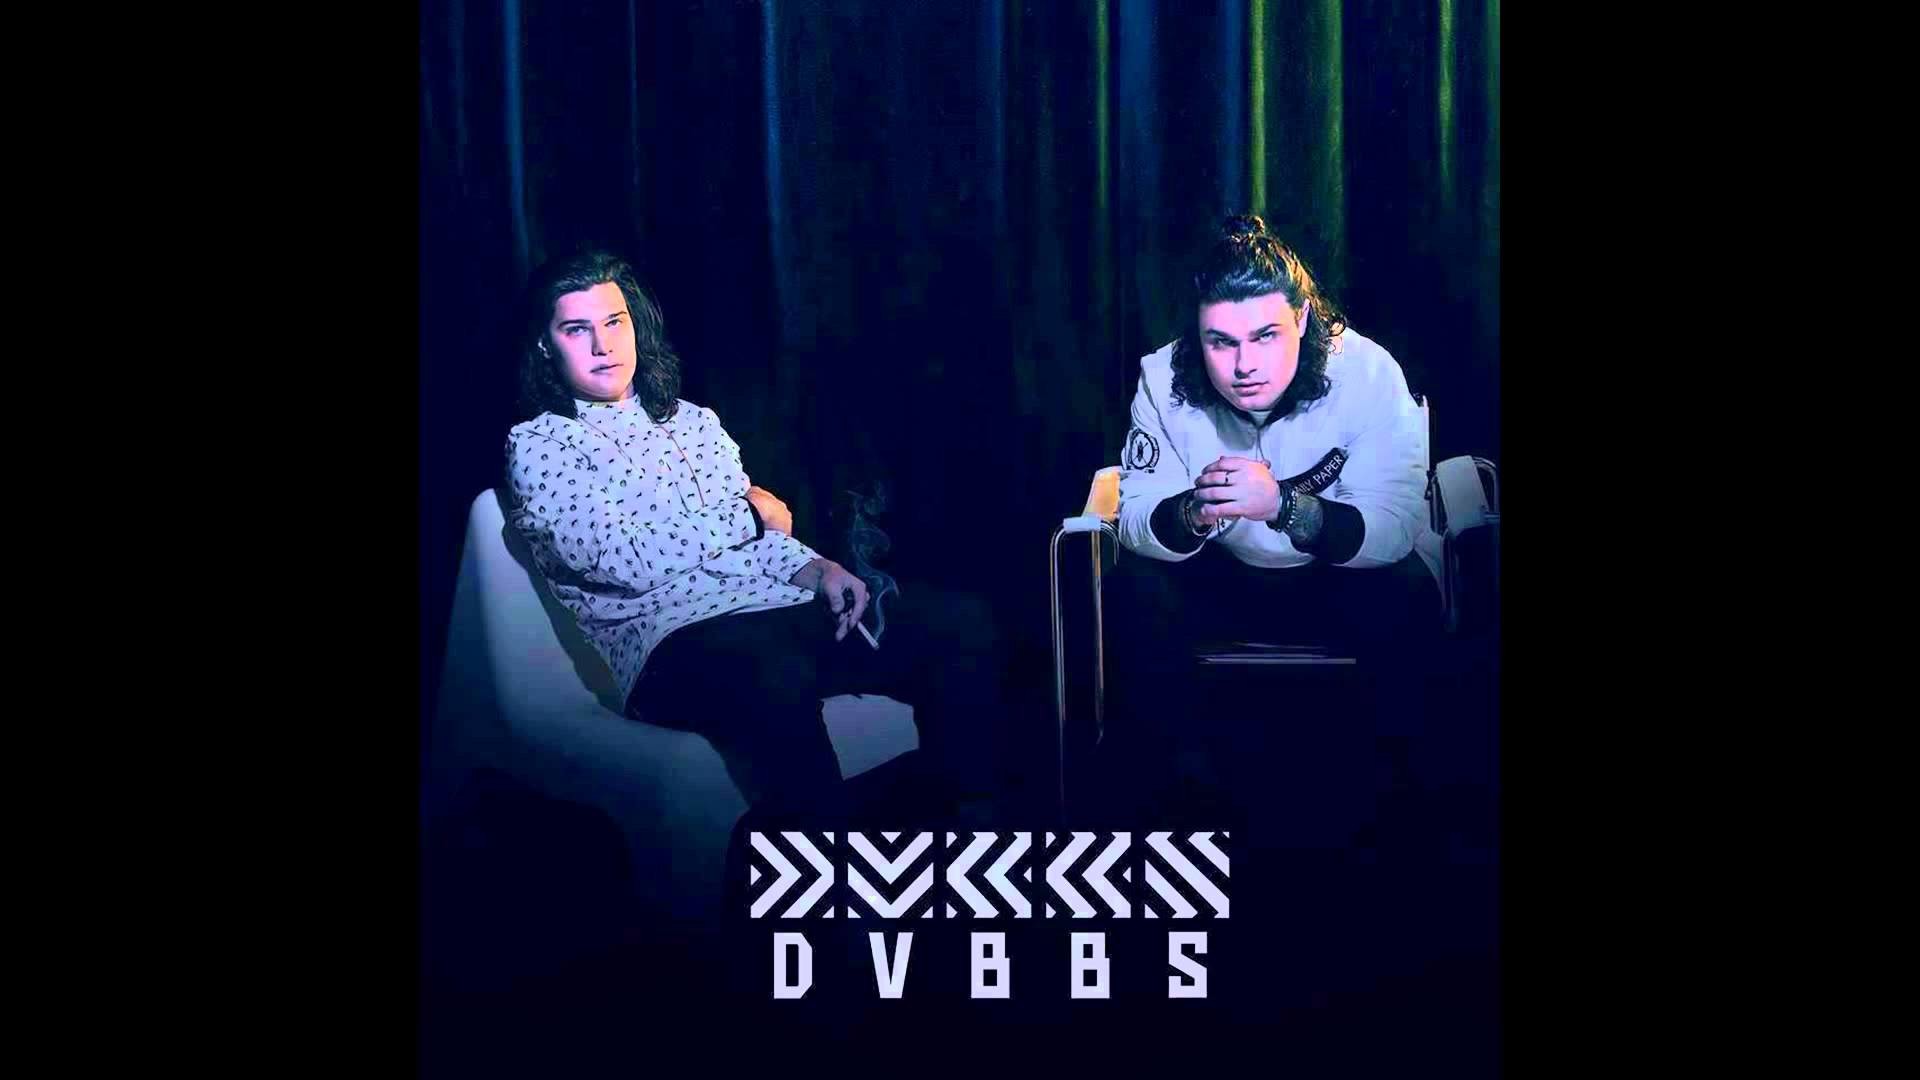 1920x1080 DVBBS - Never Leave [Original Mix]